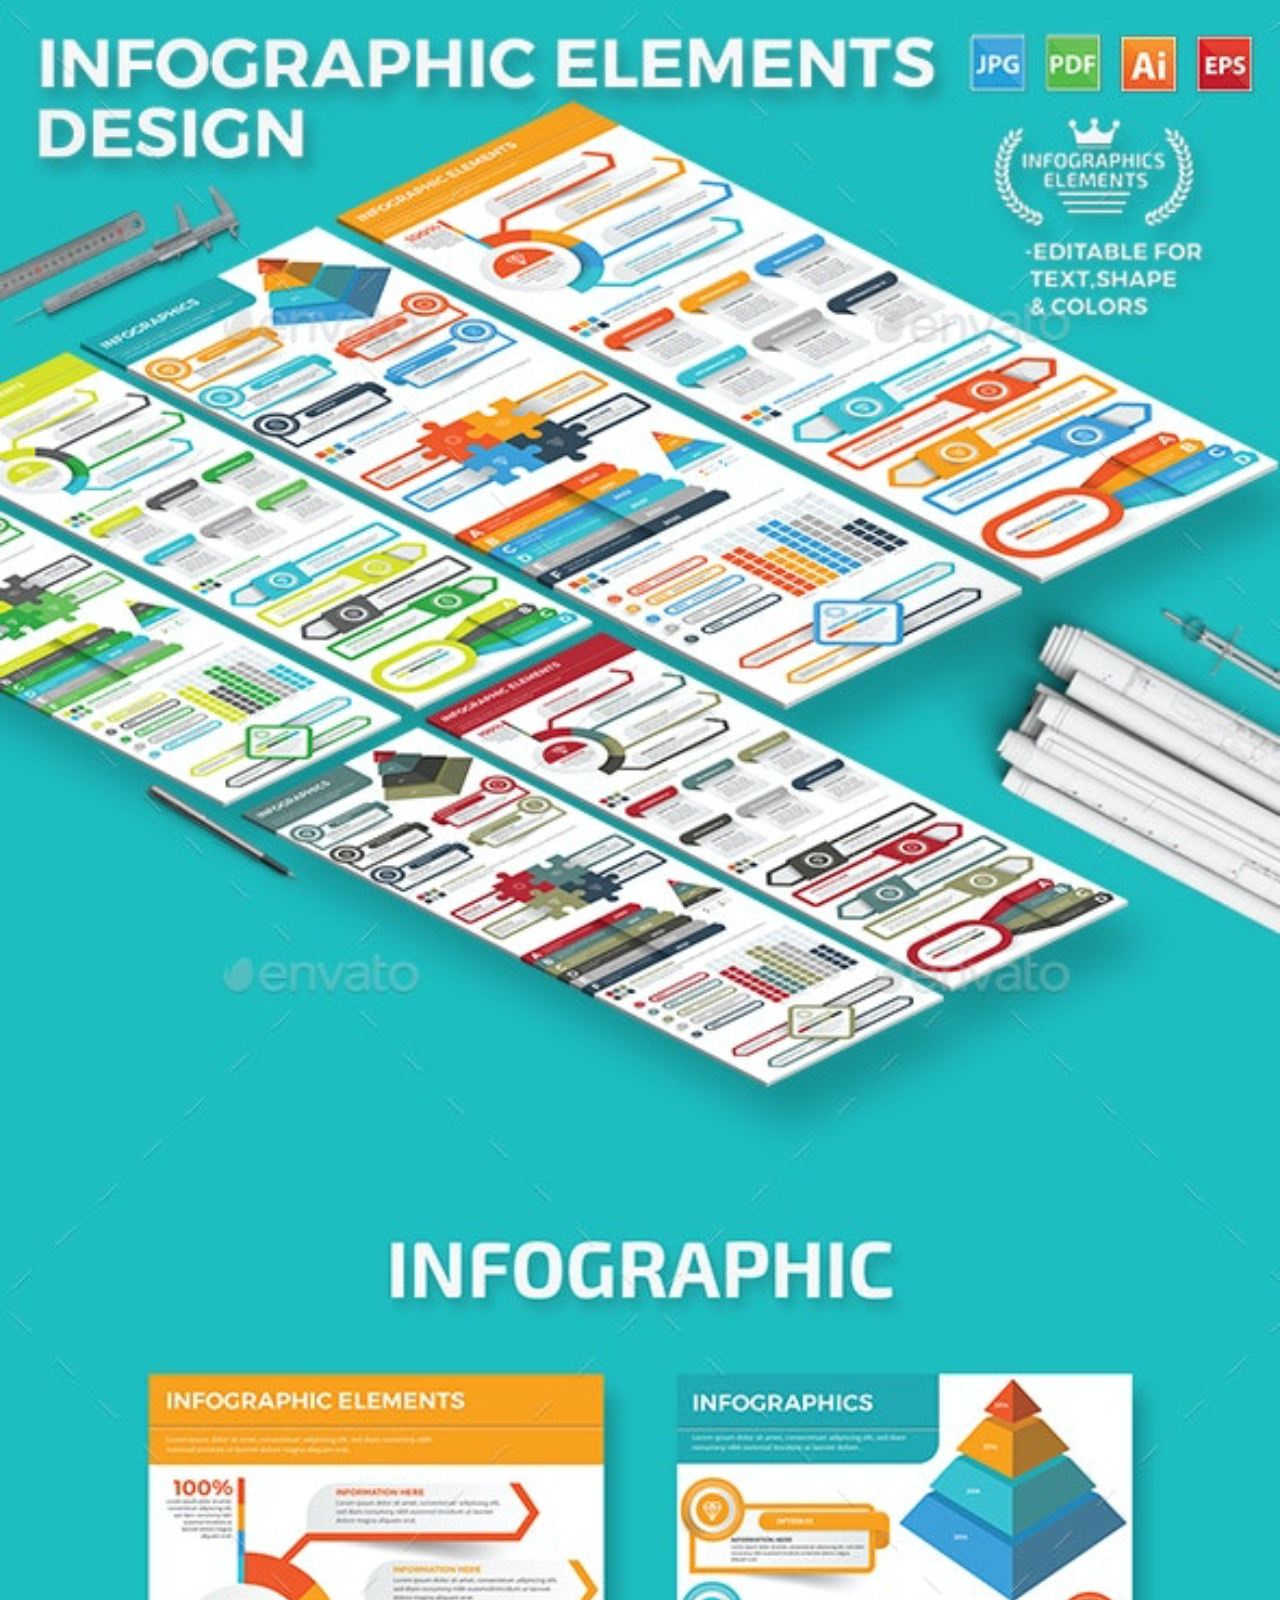 Infographic elements design pinterest image.